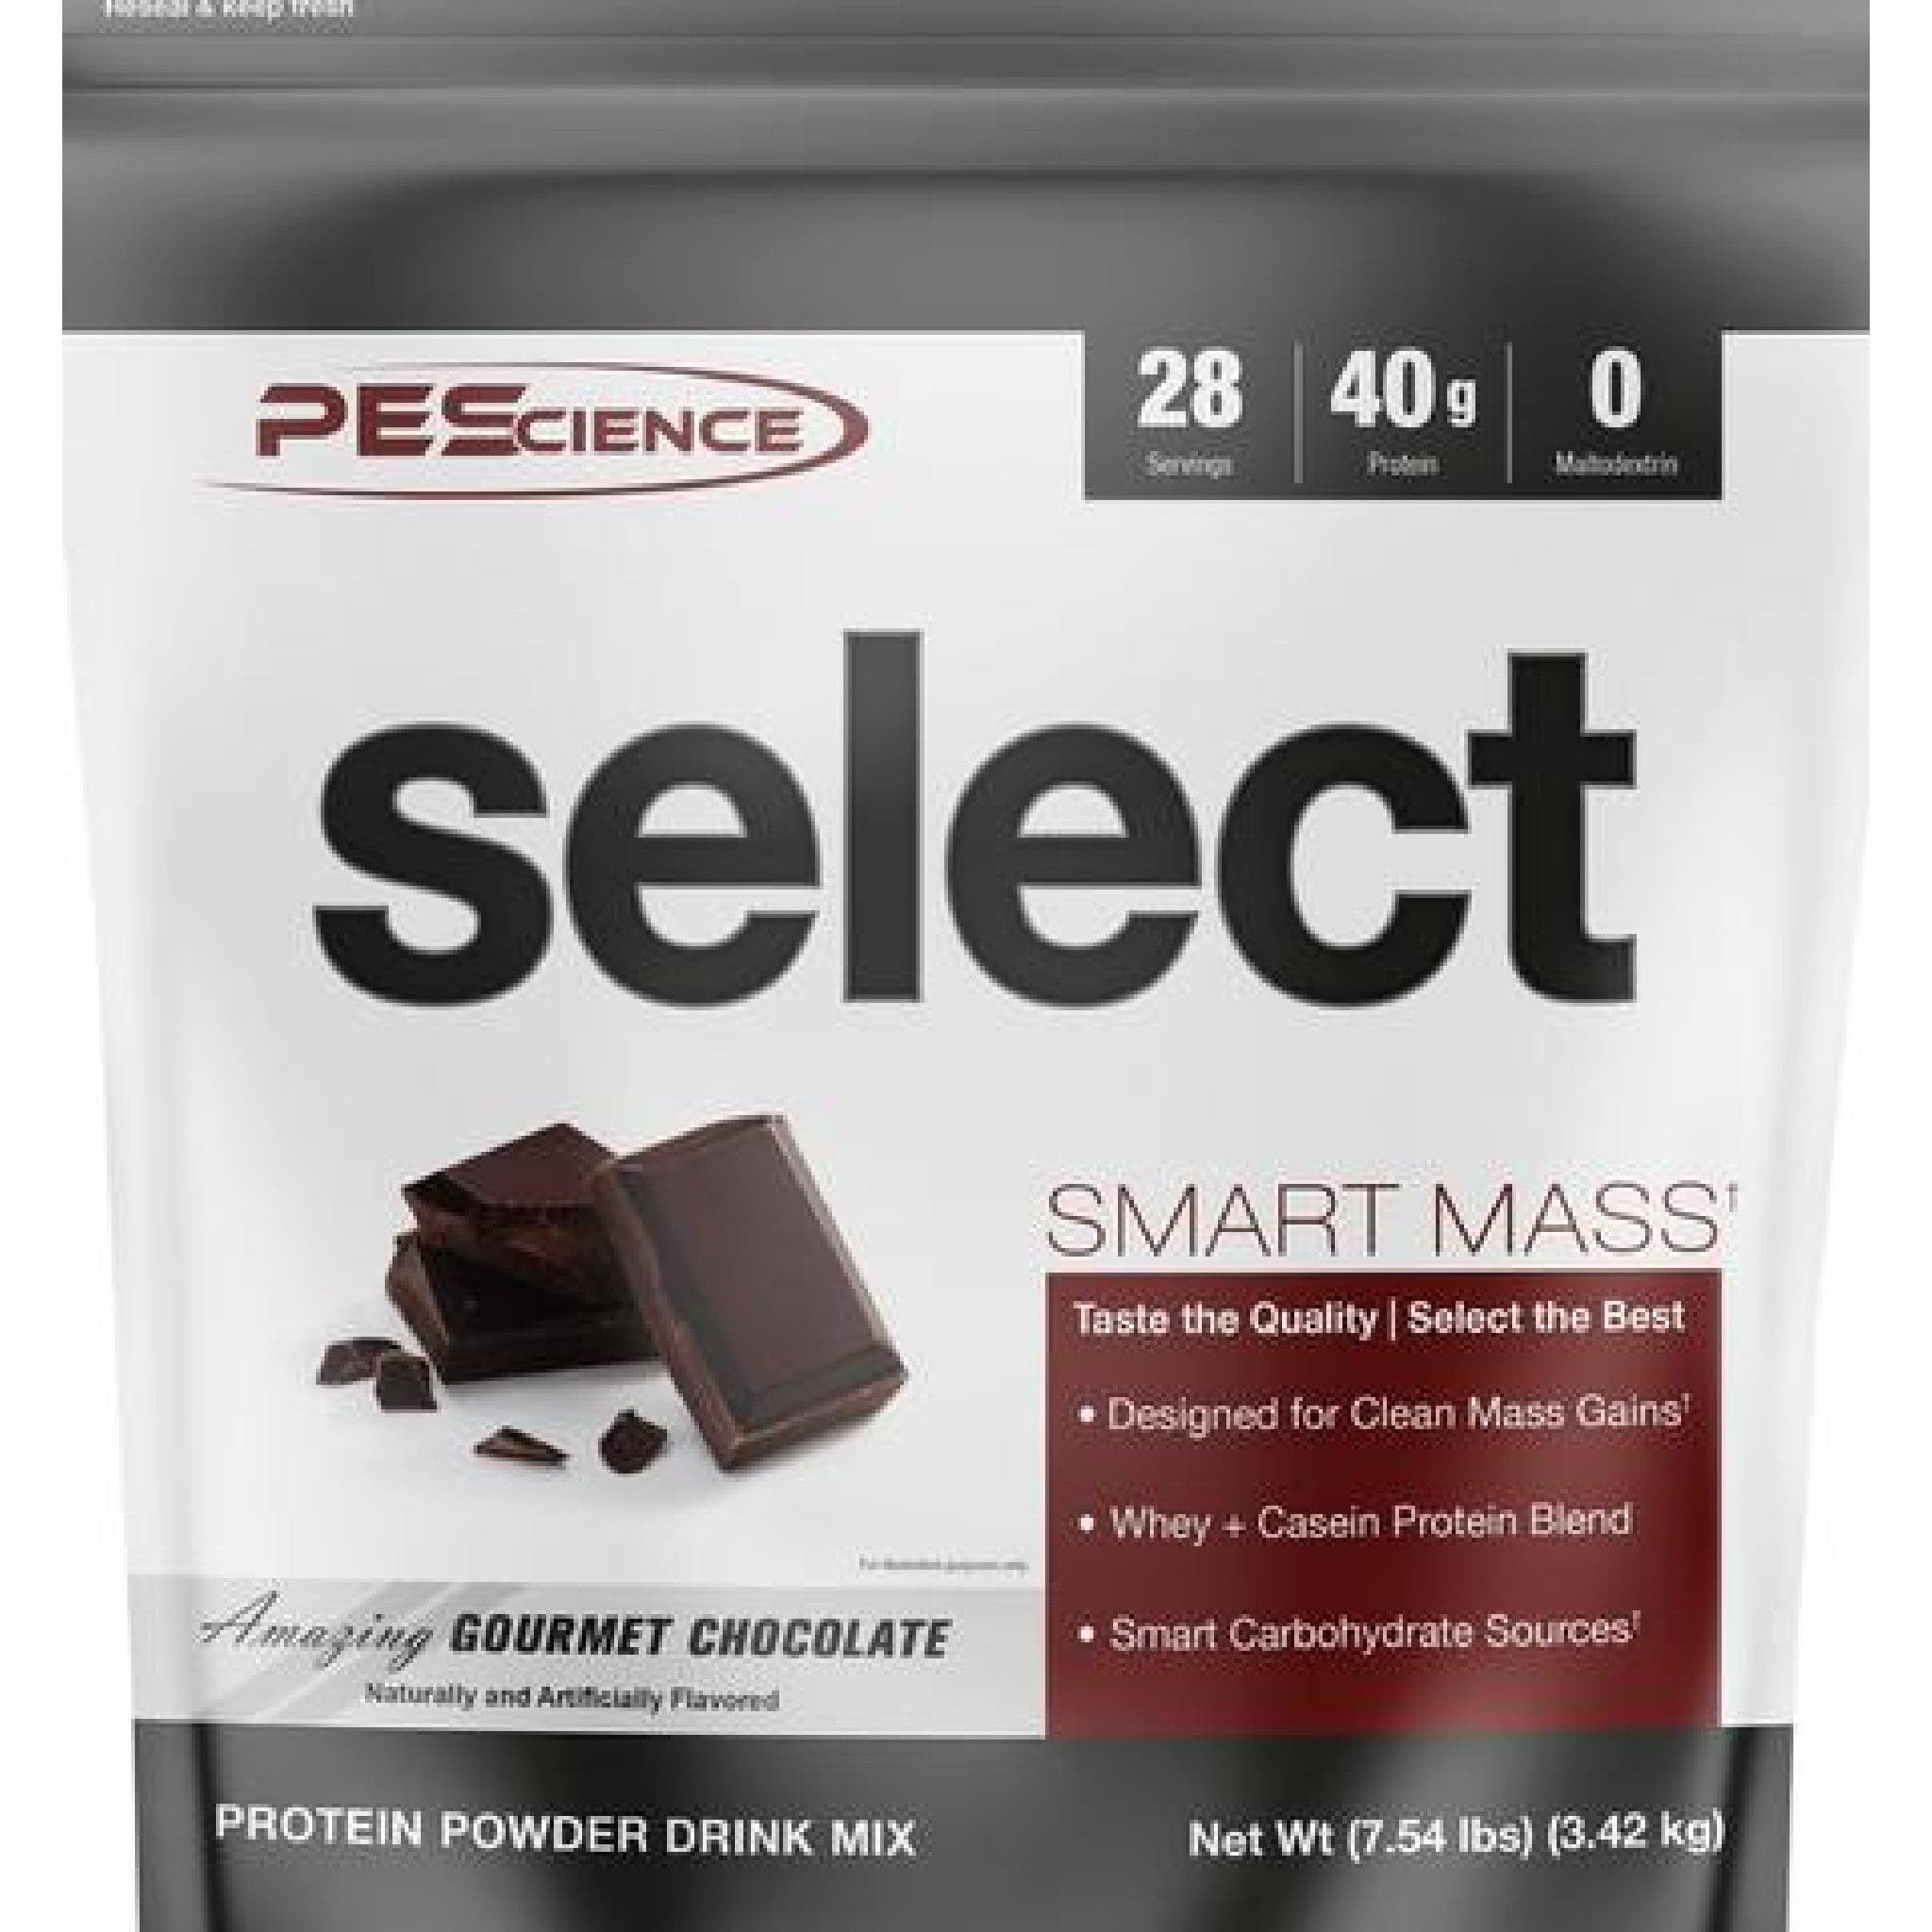 PEScience Select Smart Mass 28 serving